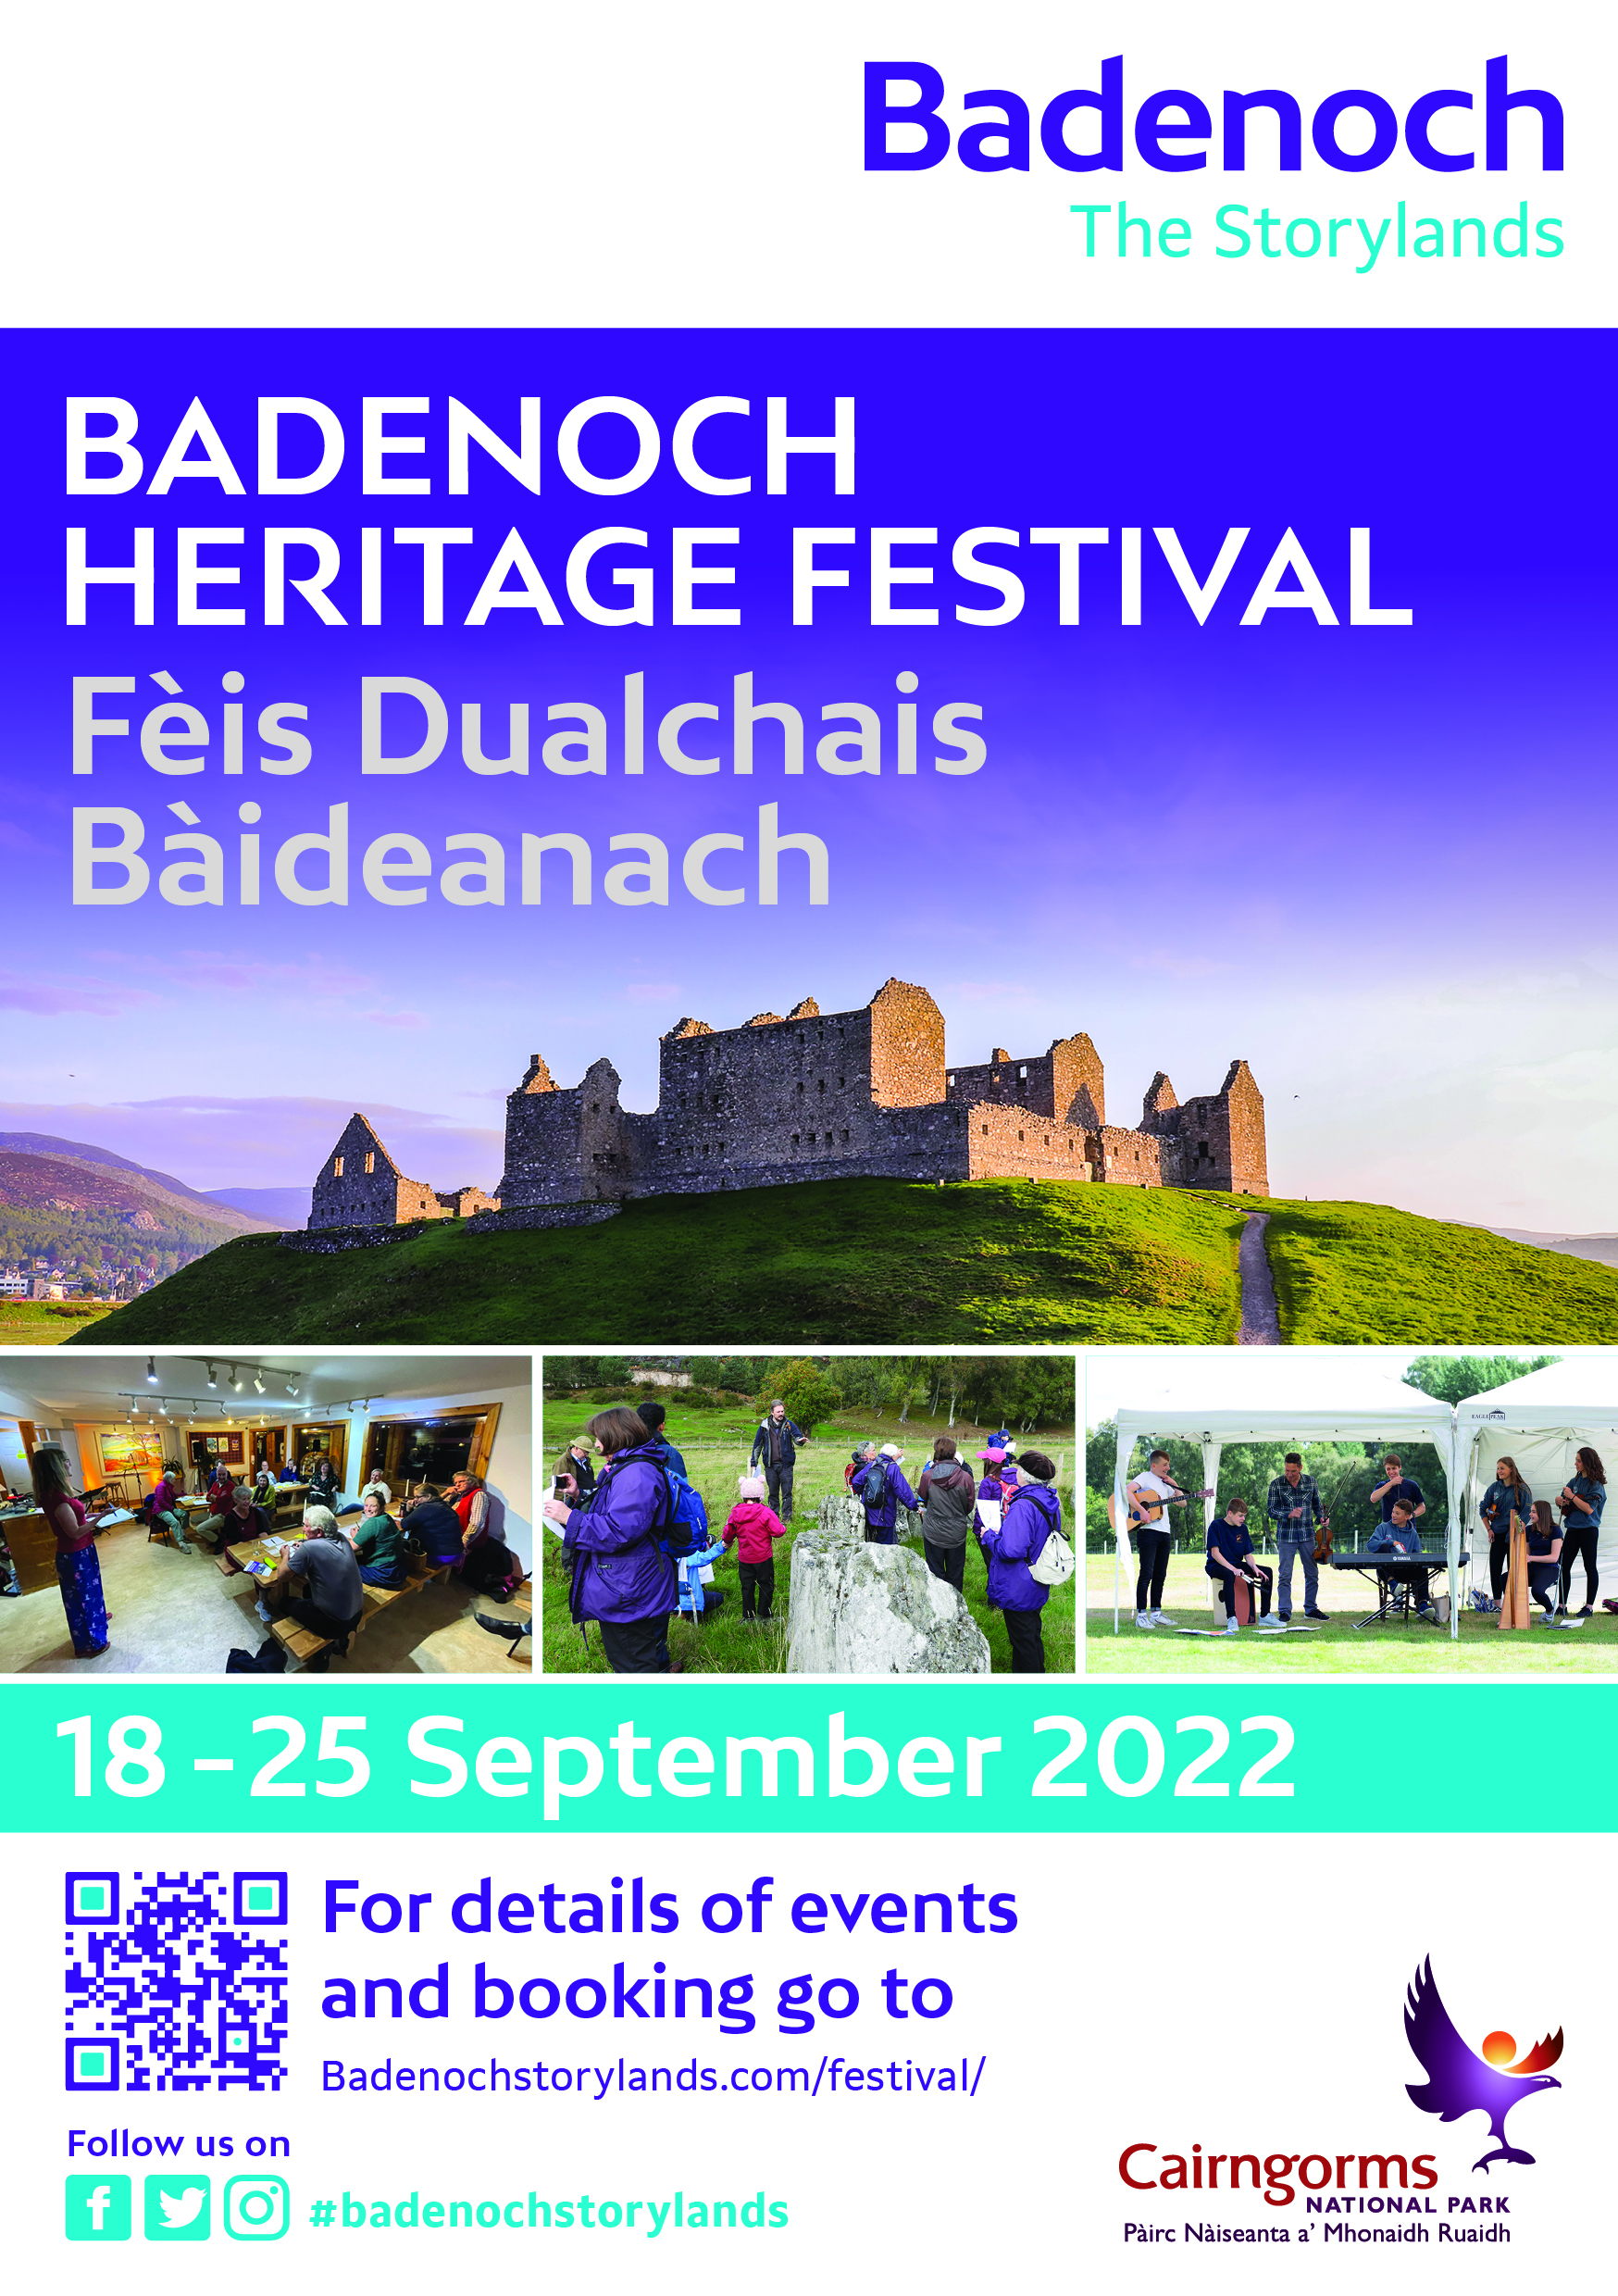 Badenoch heritage Festival